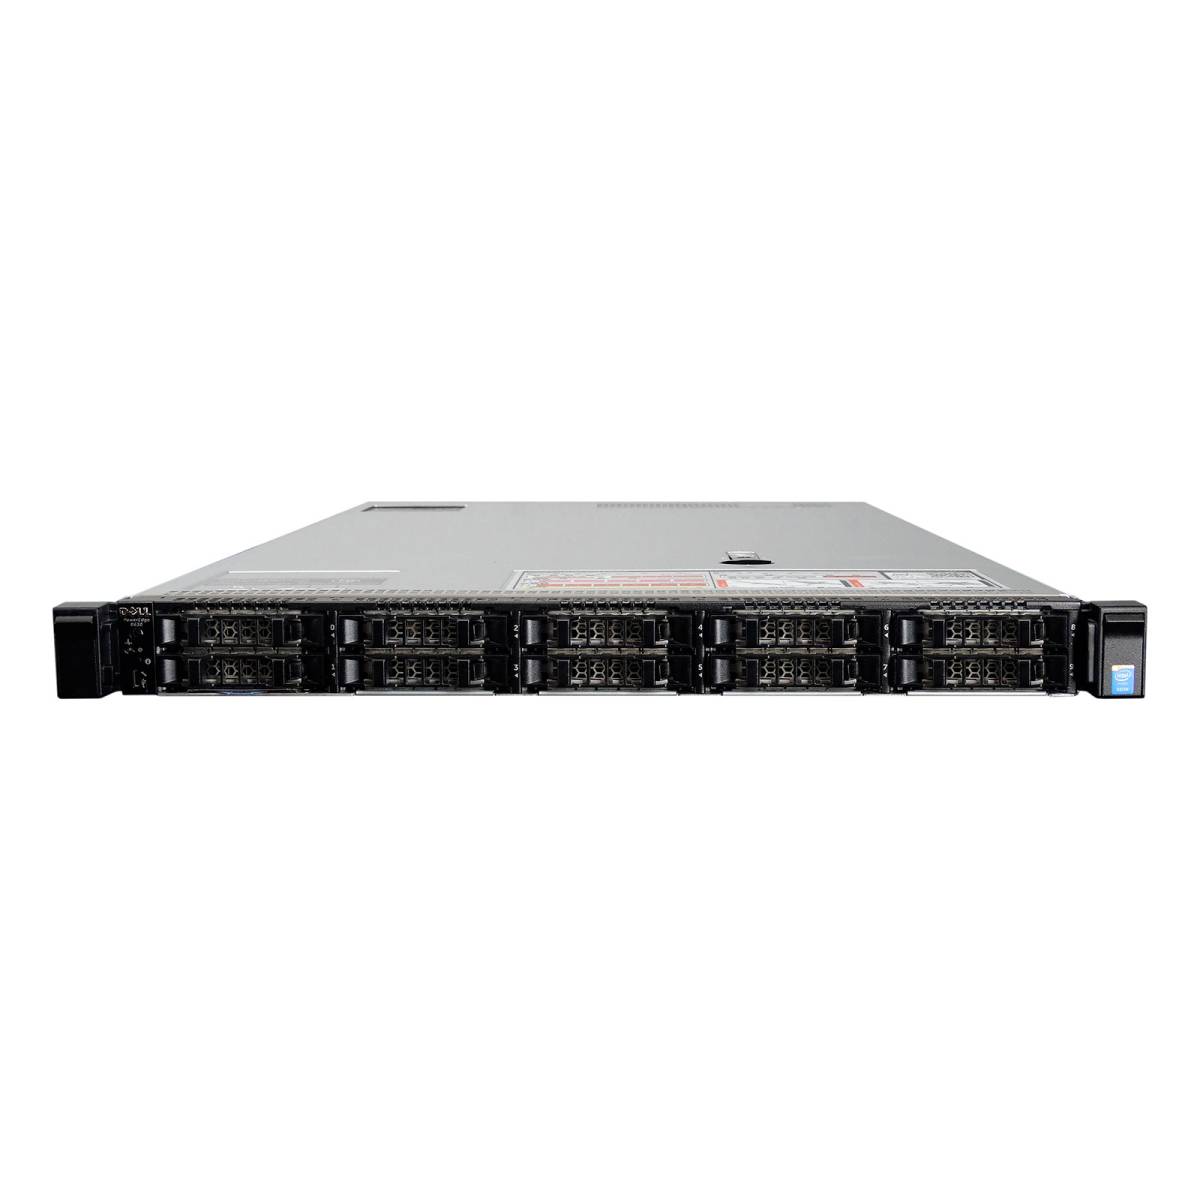 Подробное фото Сервер DELL PowerEdge R630 Xeon 2x E5-2697Av4 256Gb 2133P DDR4 10x noHDD 2.5", SAS RAID Perc H730 mini, 1024Mb, DVD, 2*PSU